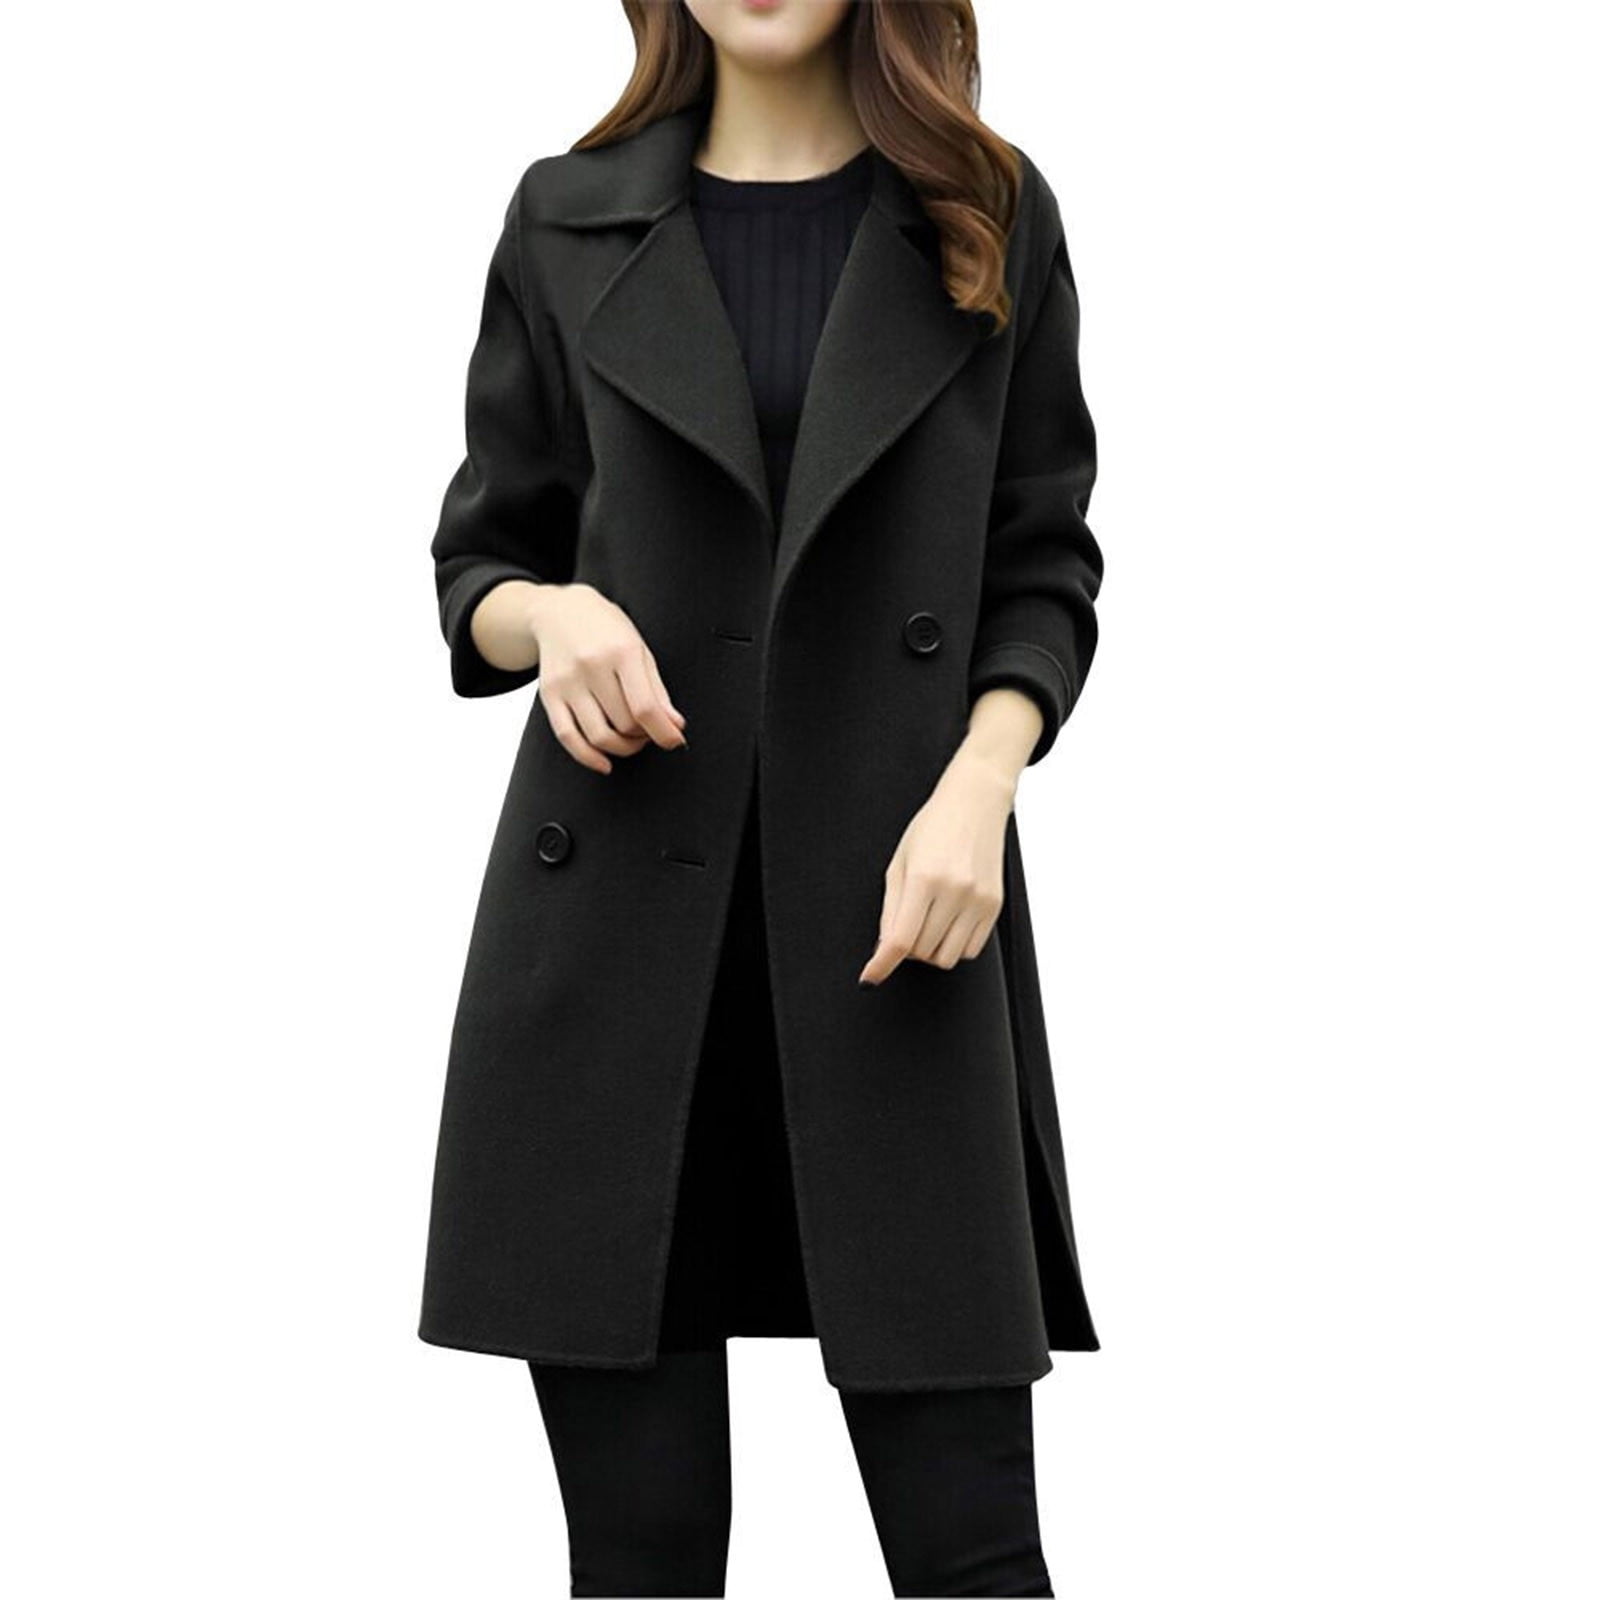 Mnycxen Womens Autumn Winter Jacket Casual Outwear Cardigan Slim Coat ...